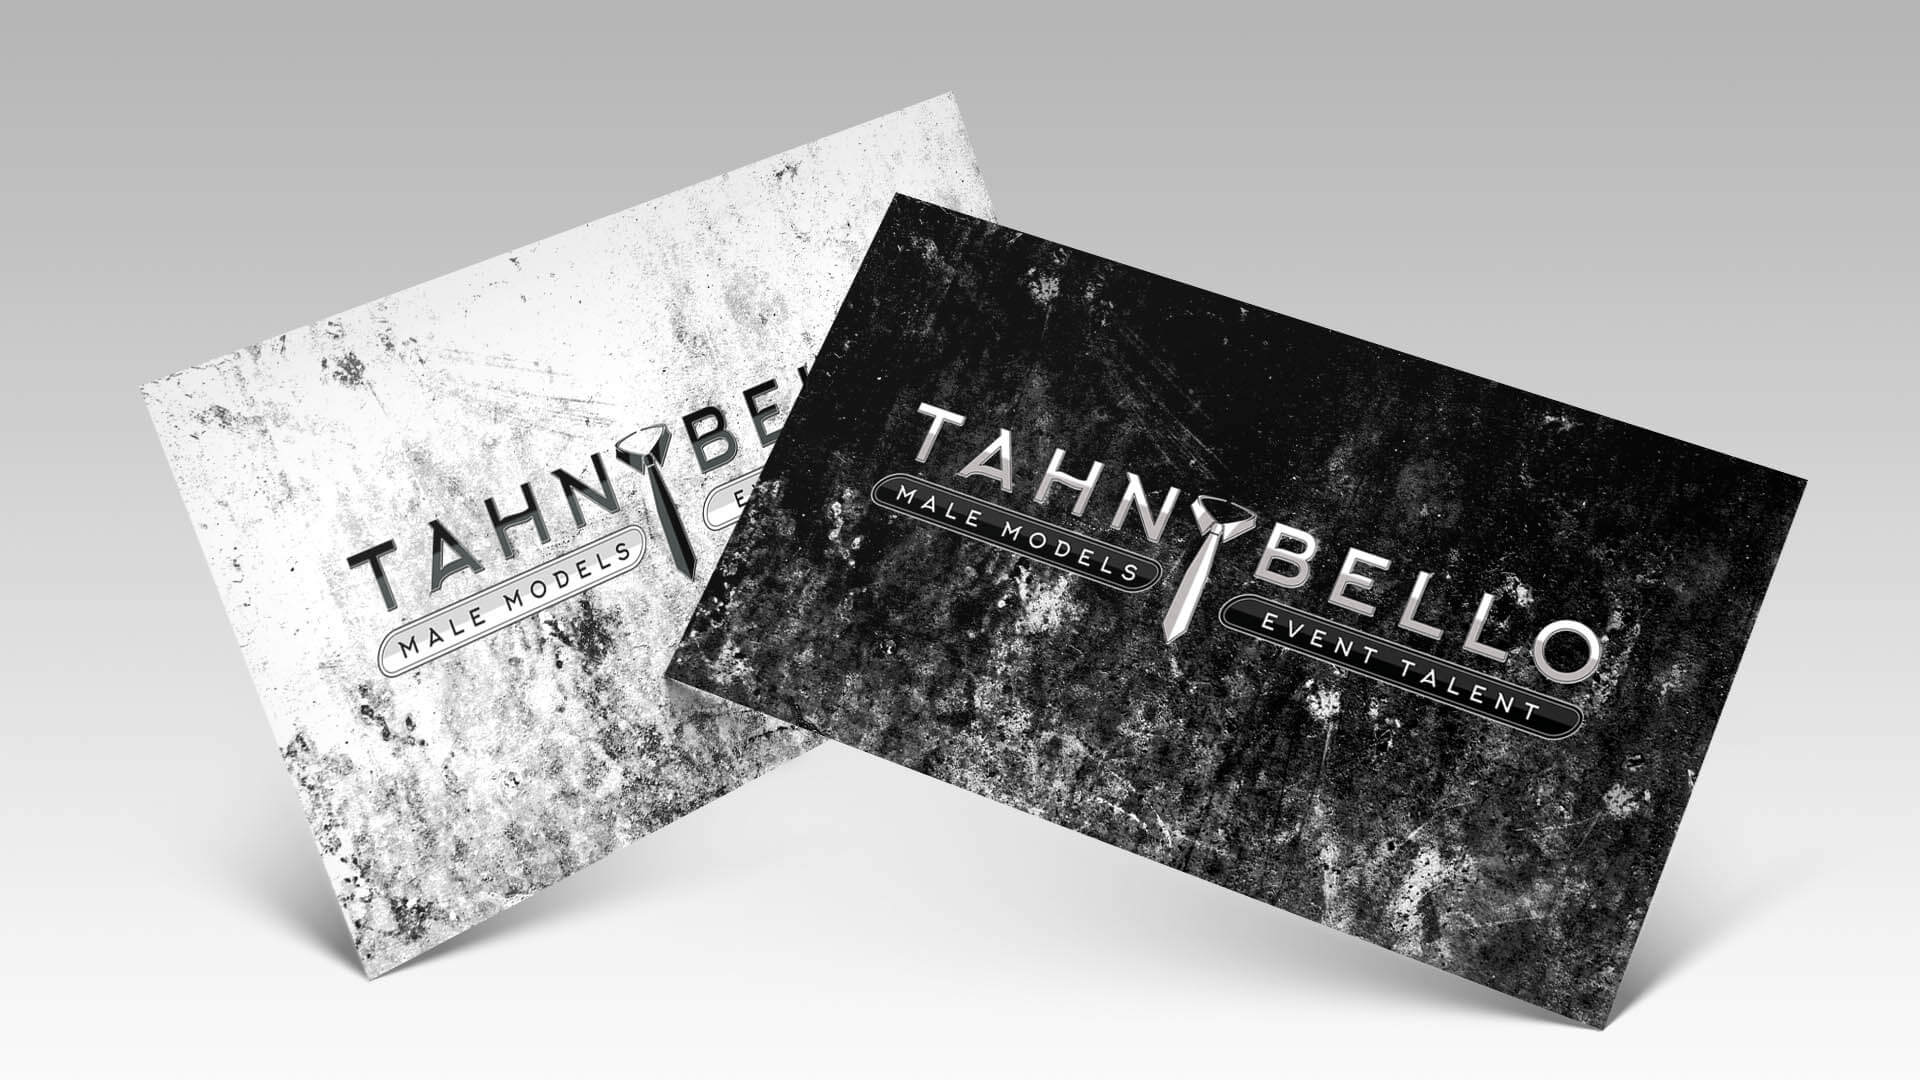 Tahn Bello business cards